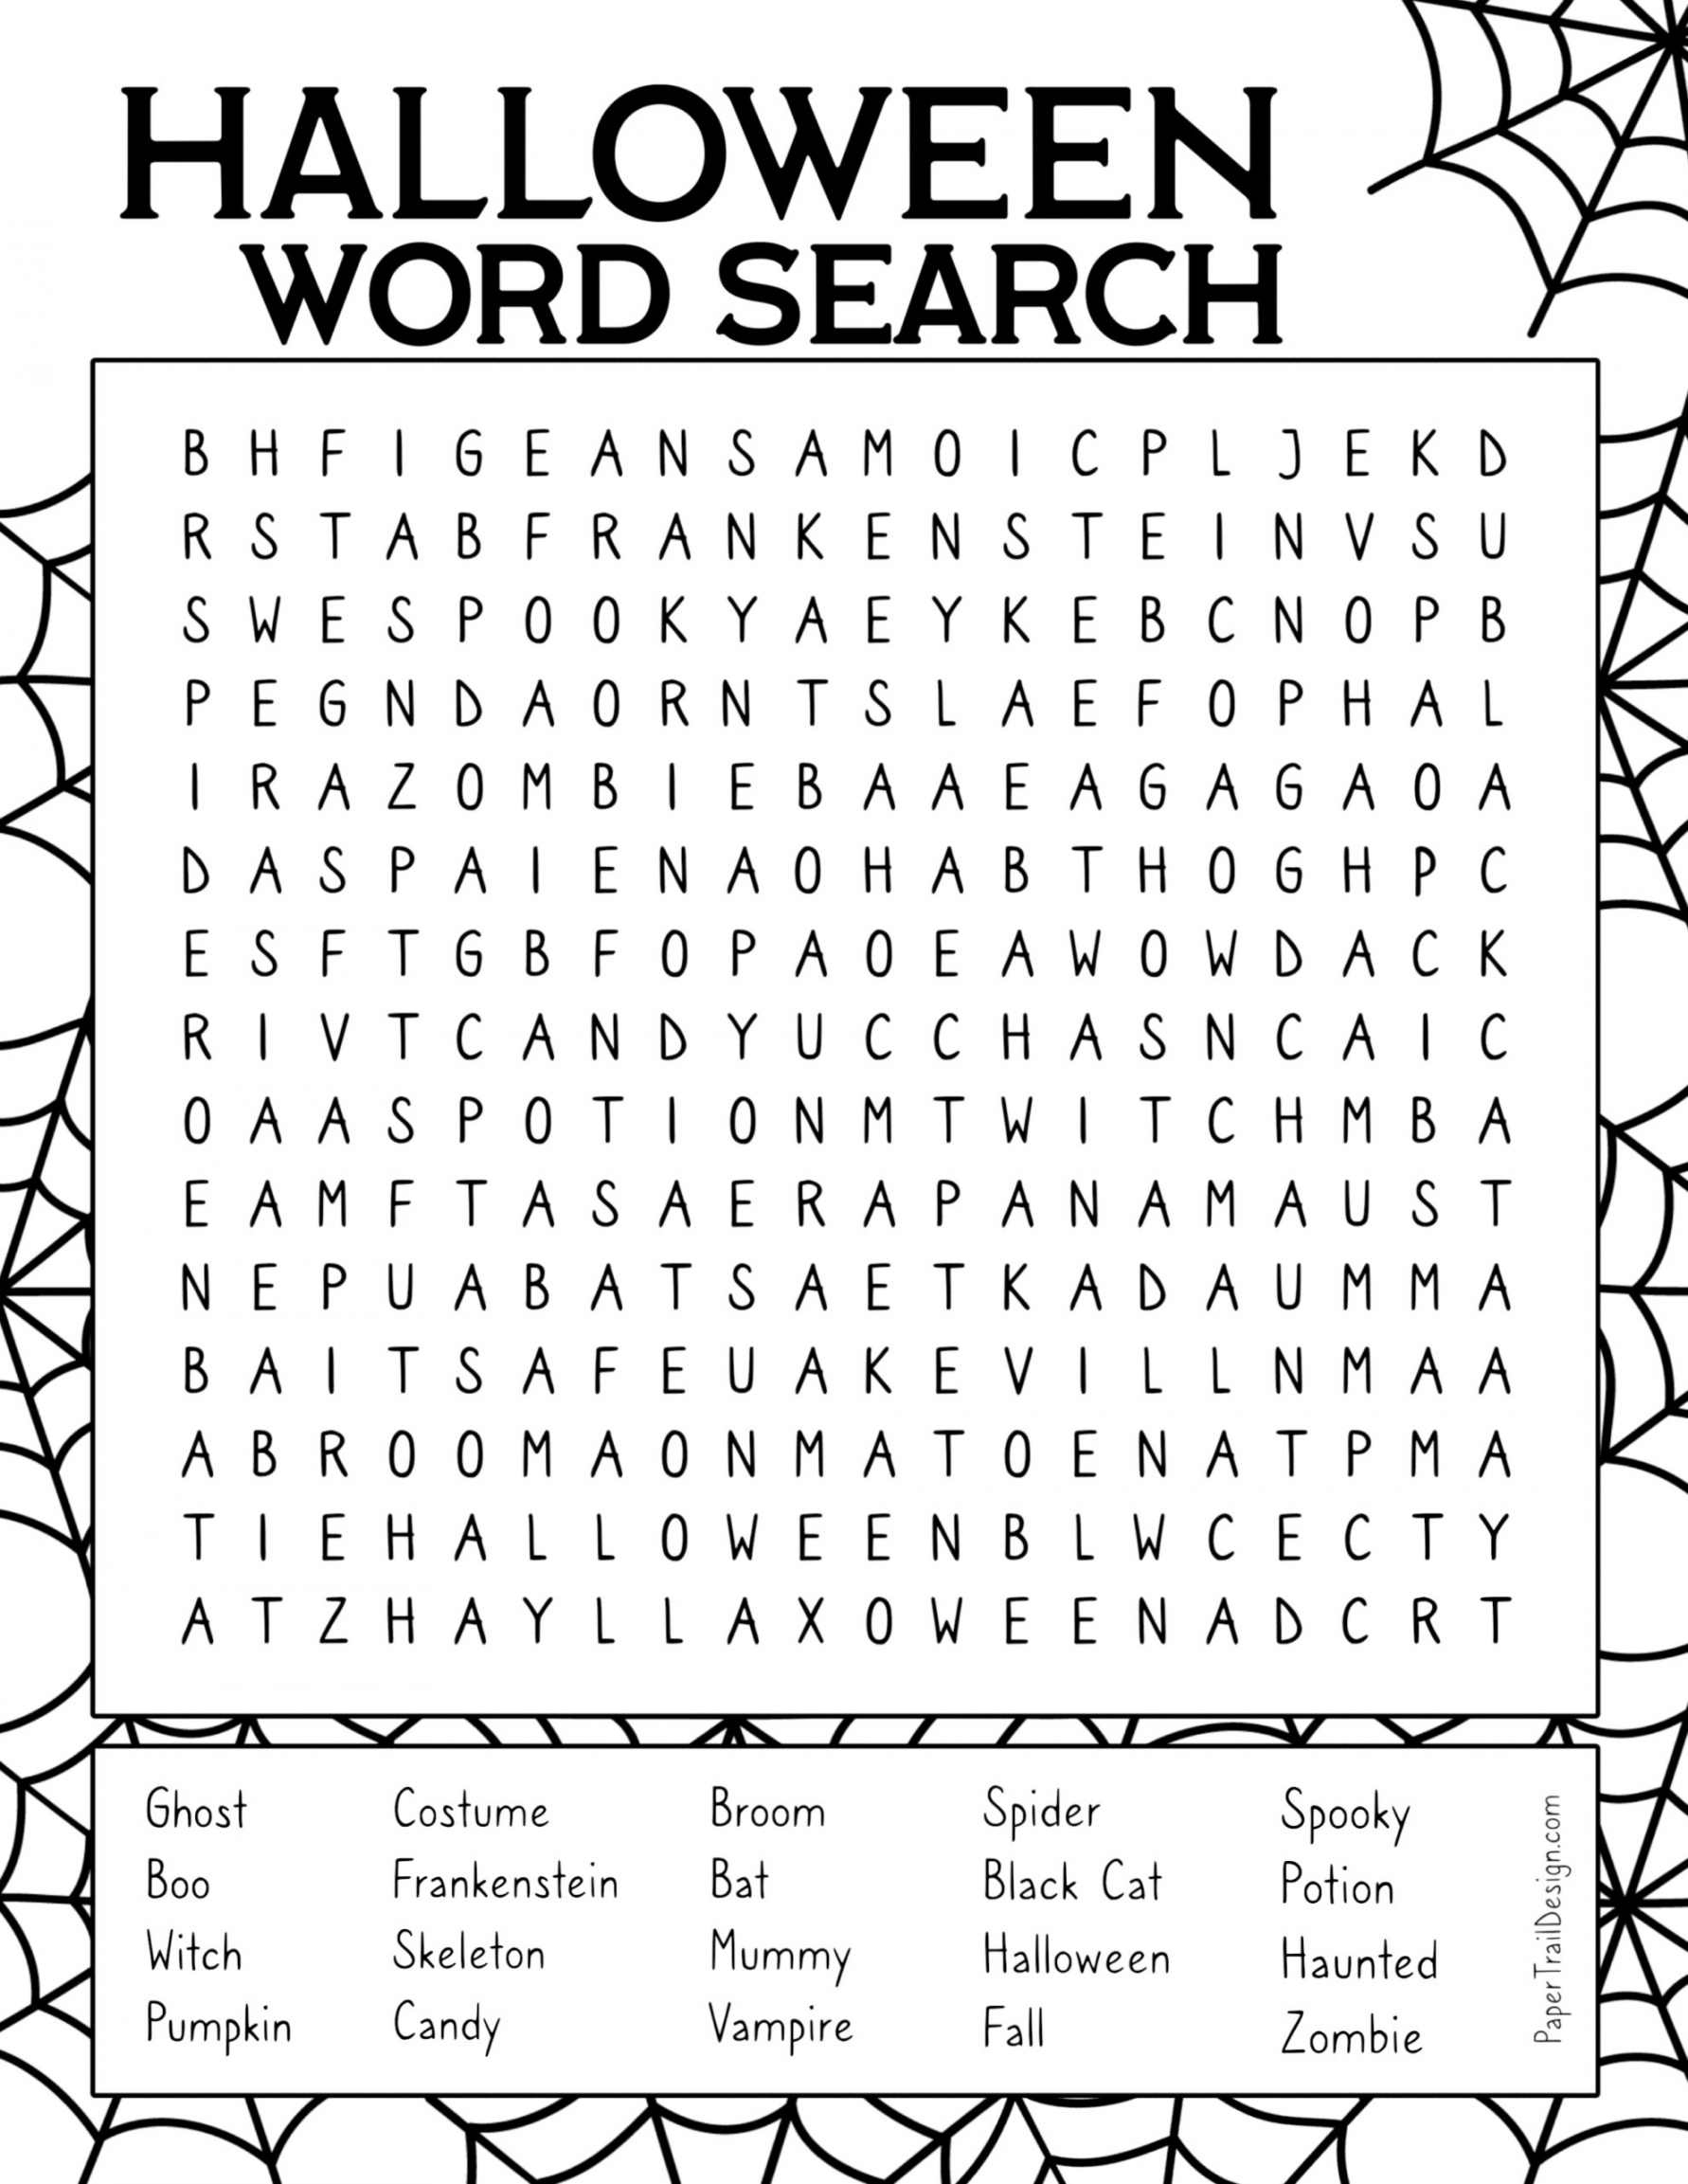 Free Printable Halloween Word Searches - Printable - Free Printable Halloween Word Search - Paper Trail Design